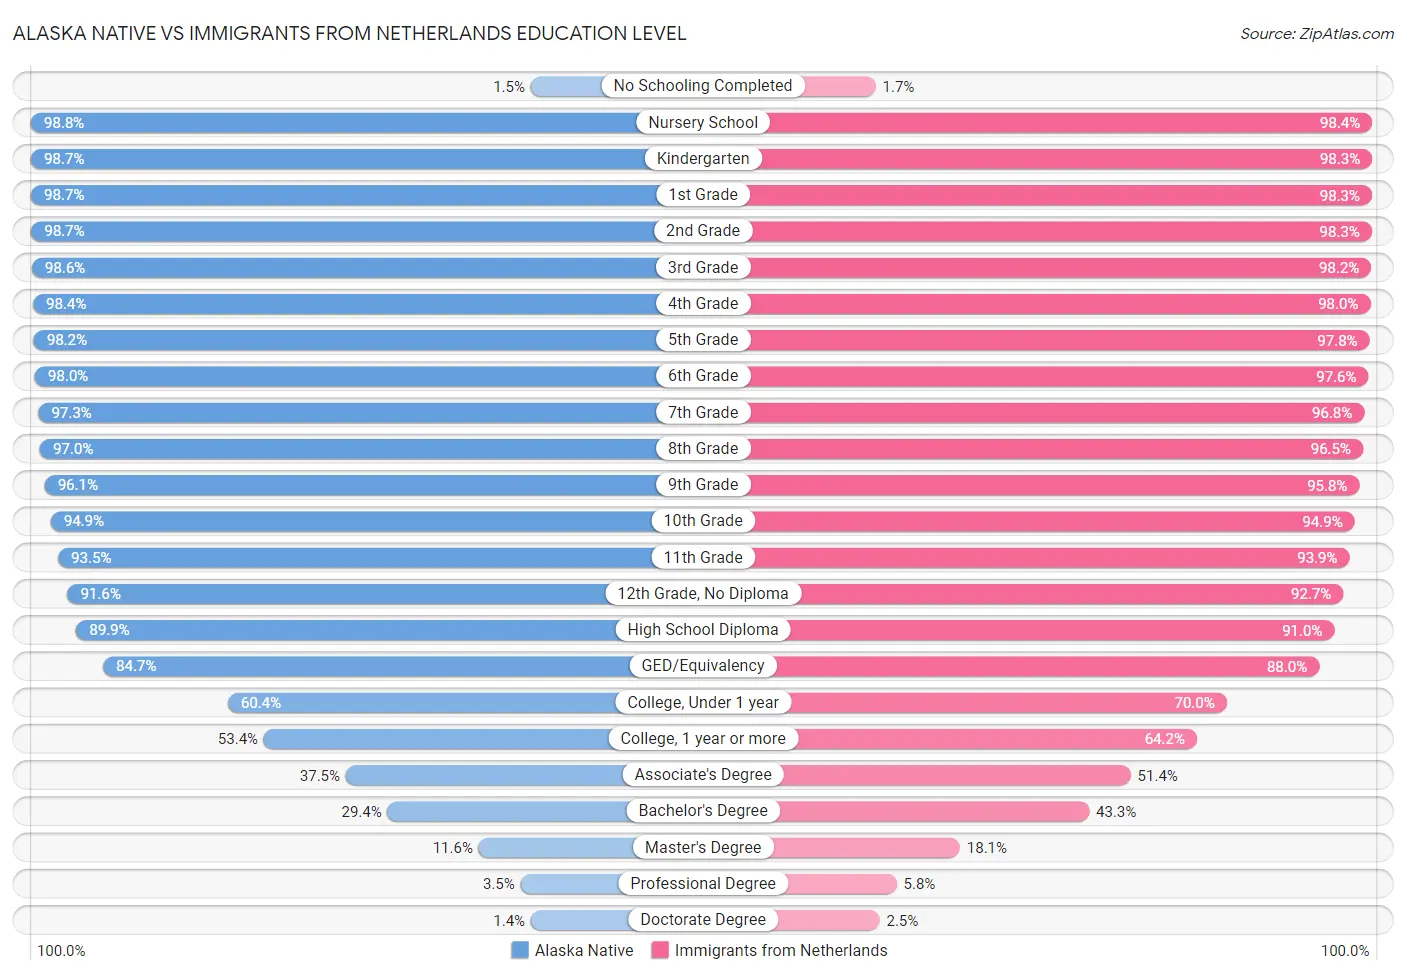 Alaska Native vs Immigrants from Netherlands Education Level